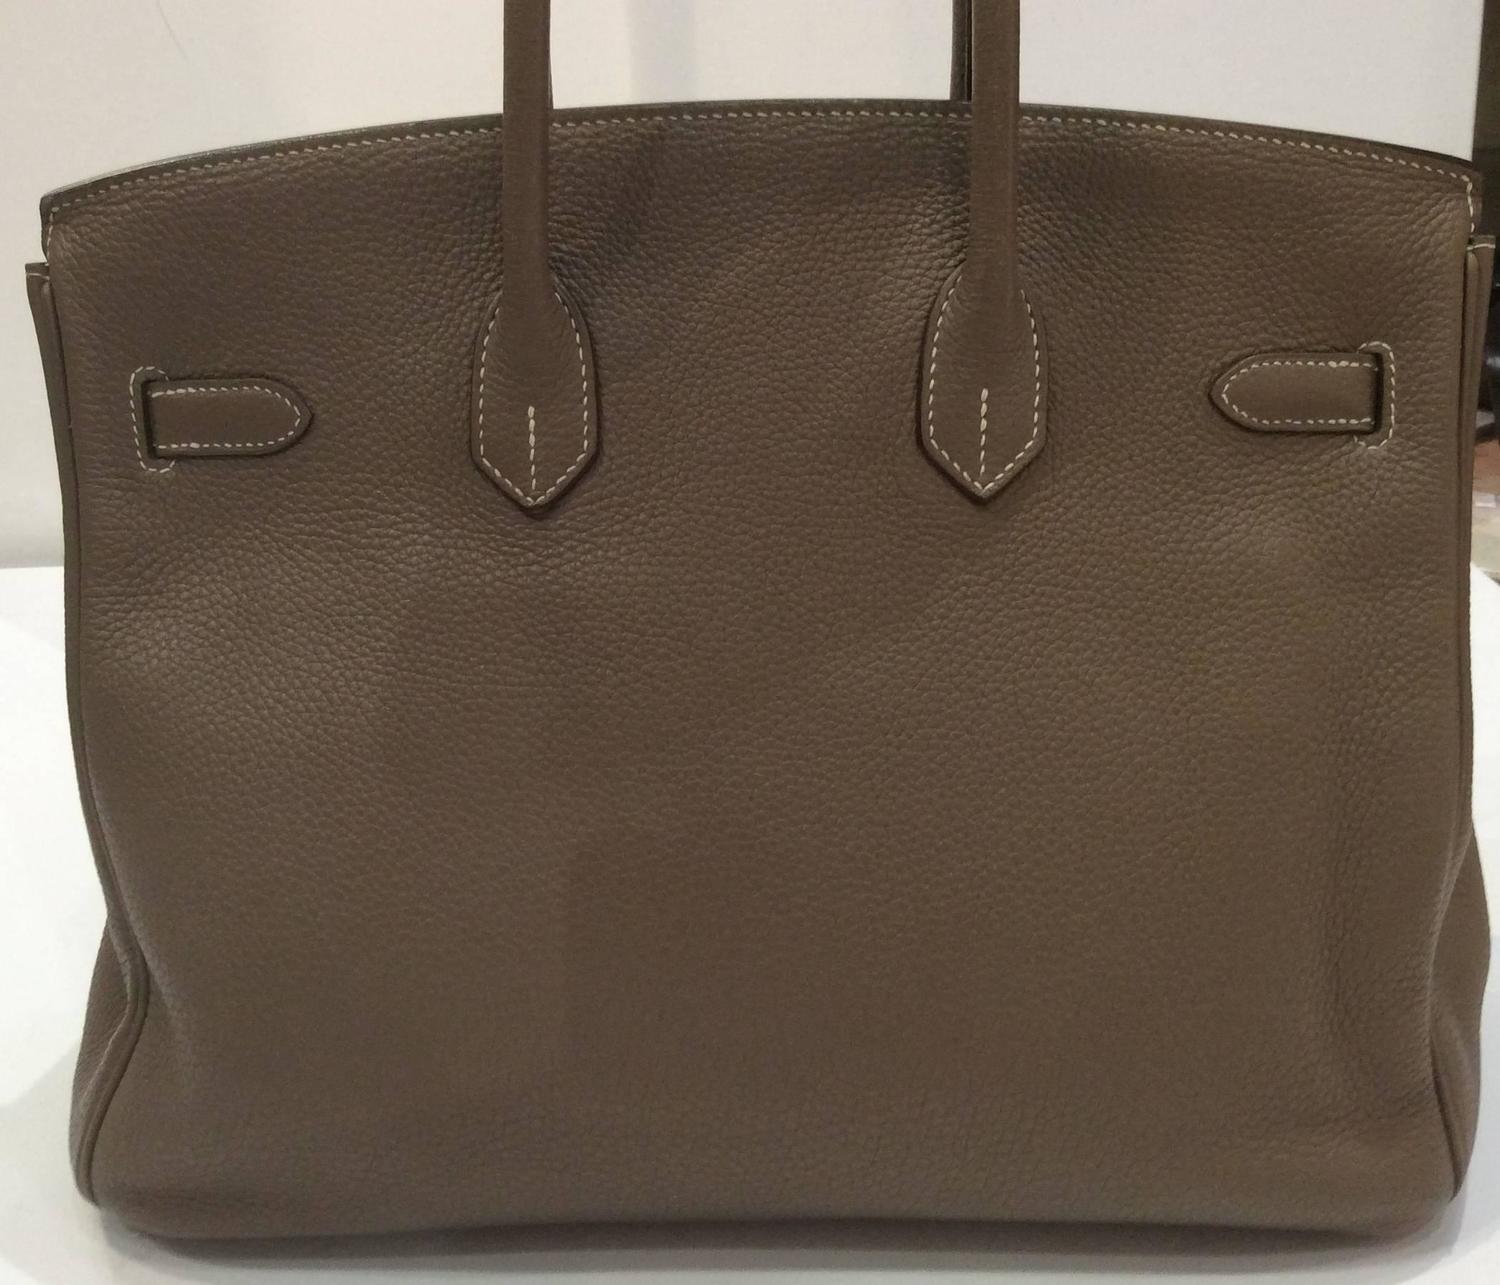 hermes leather bags - Hermes Etoupe Clemence Leather Birkin Bag - 35 - Palladium ...